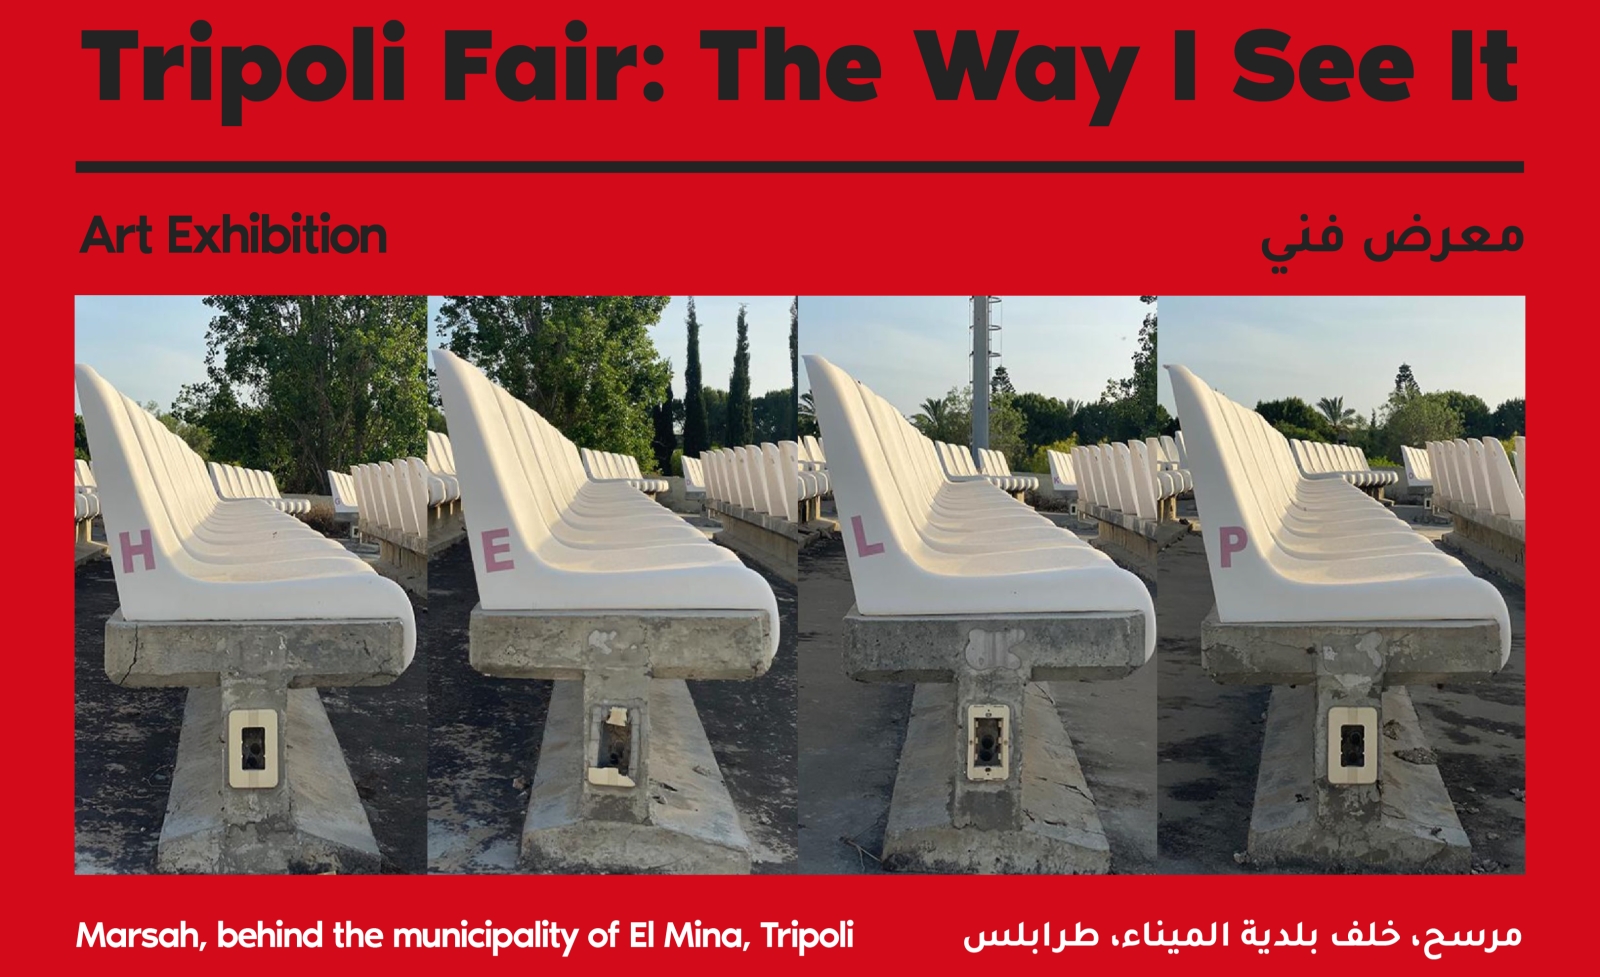 Tripoli Fair: The Way I See It